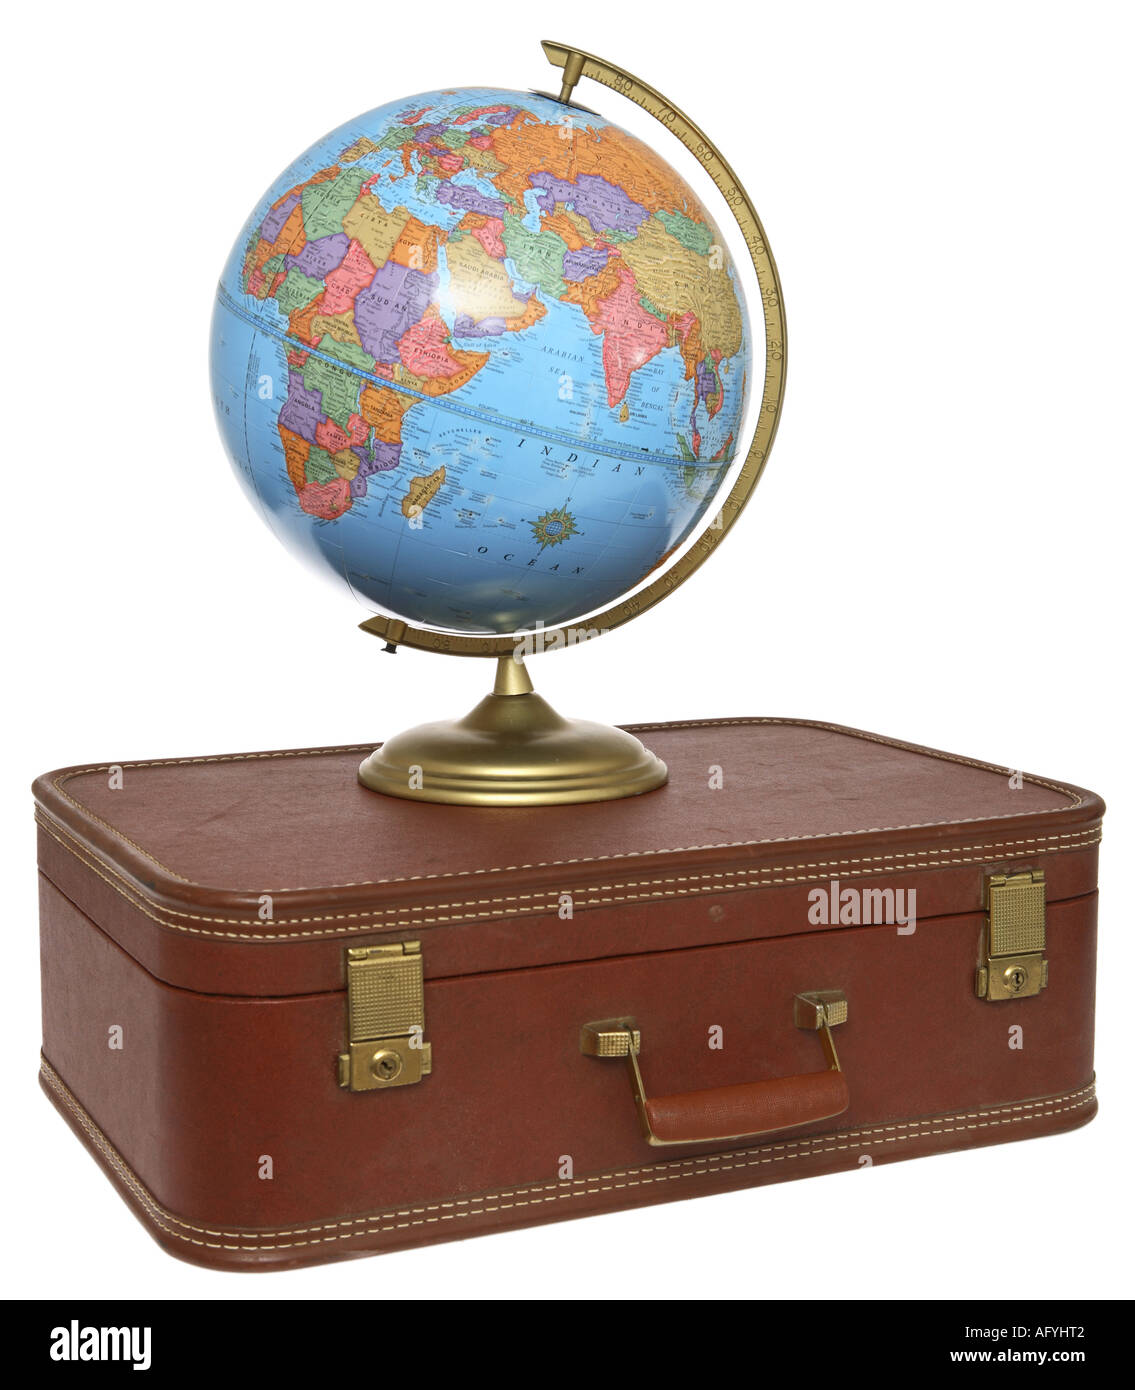 Globus und Koffer Stockfotografie - Alamy